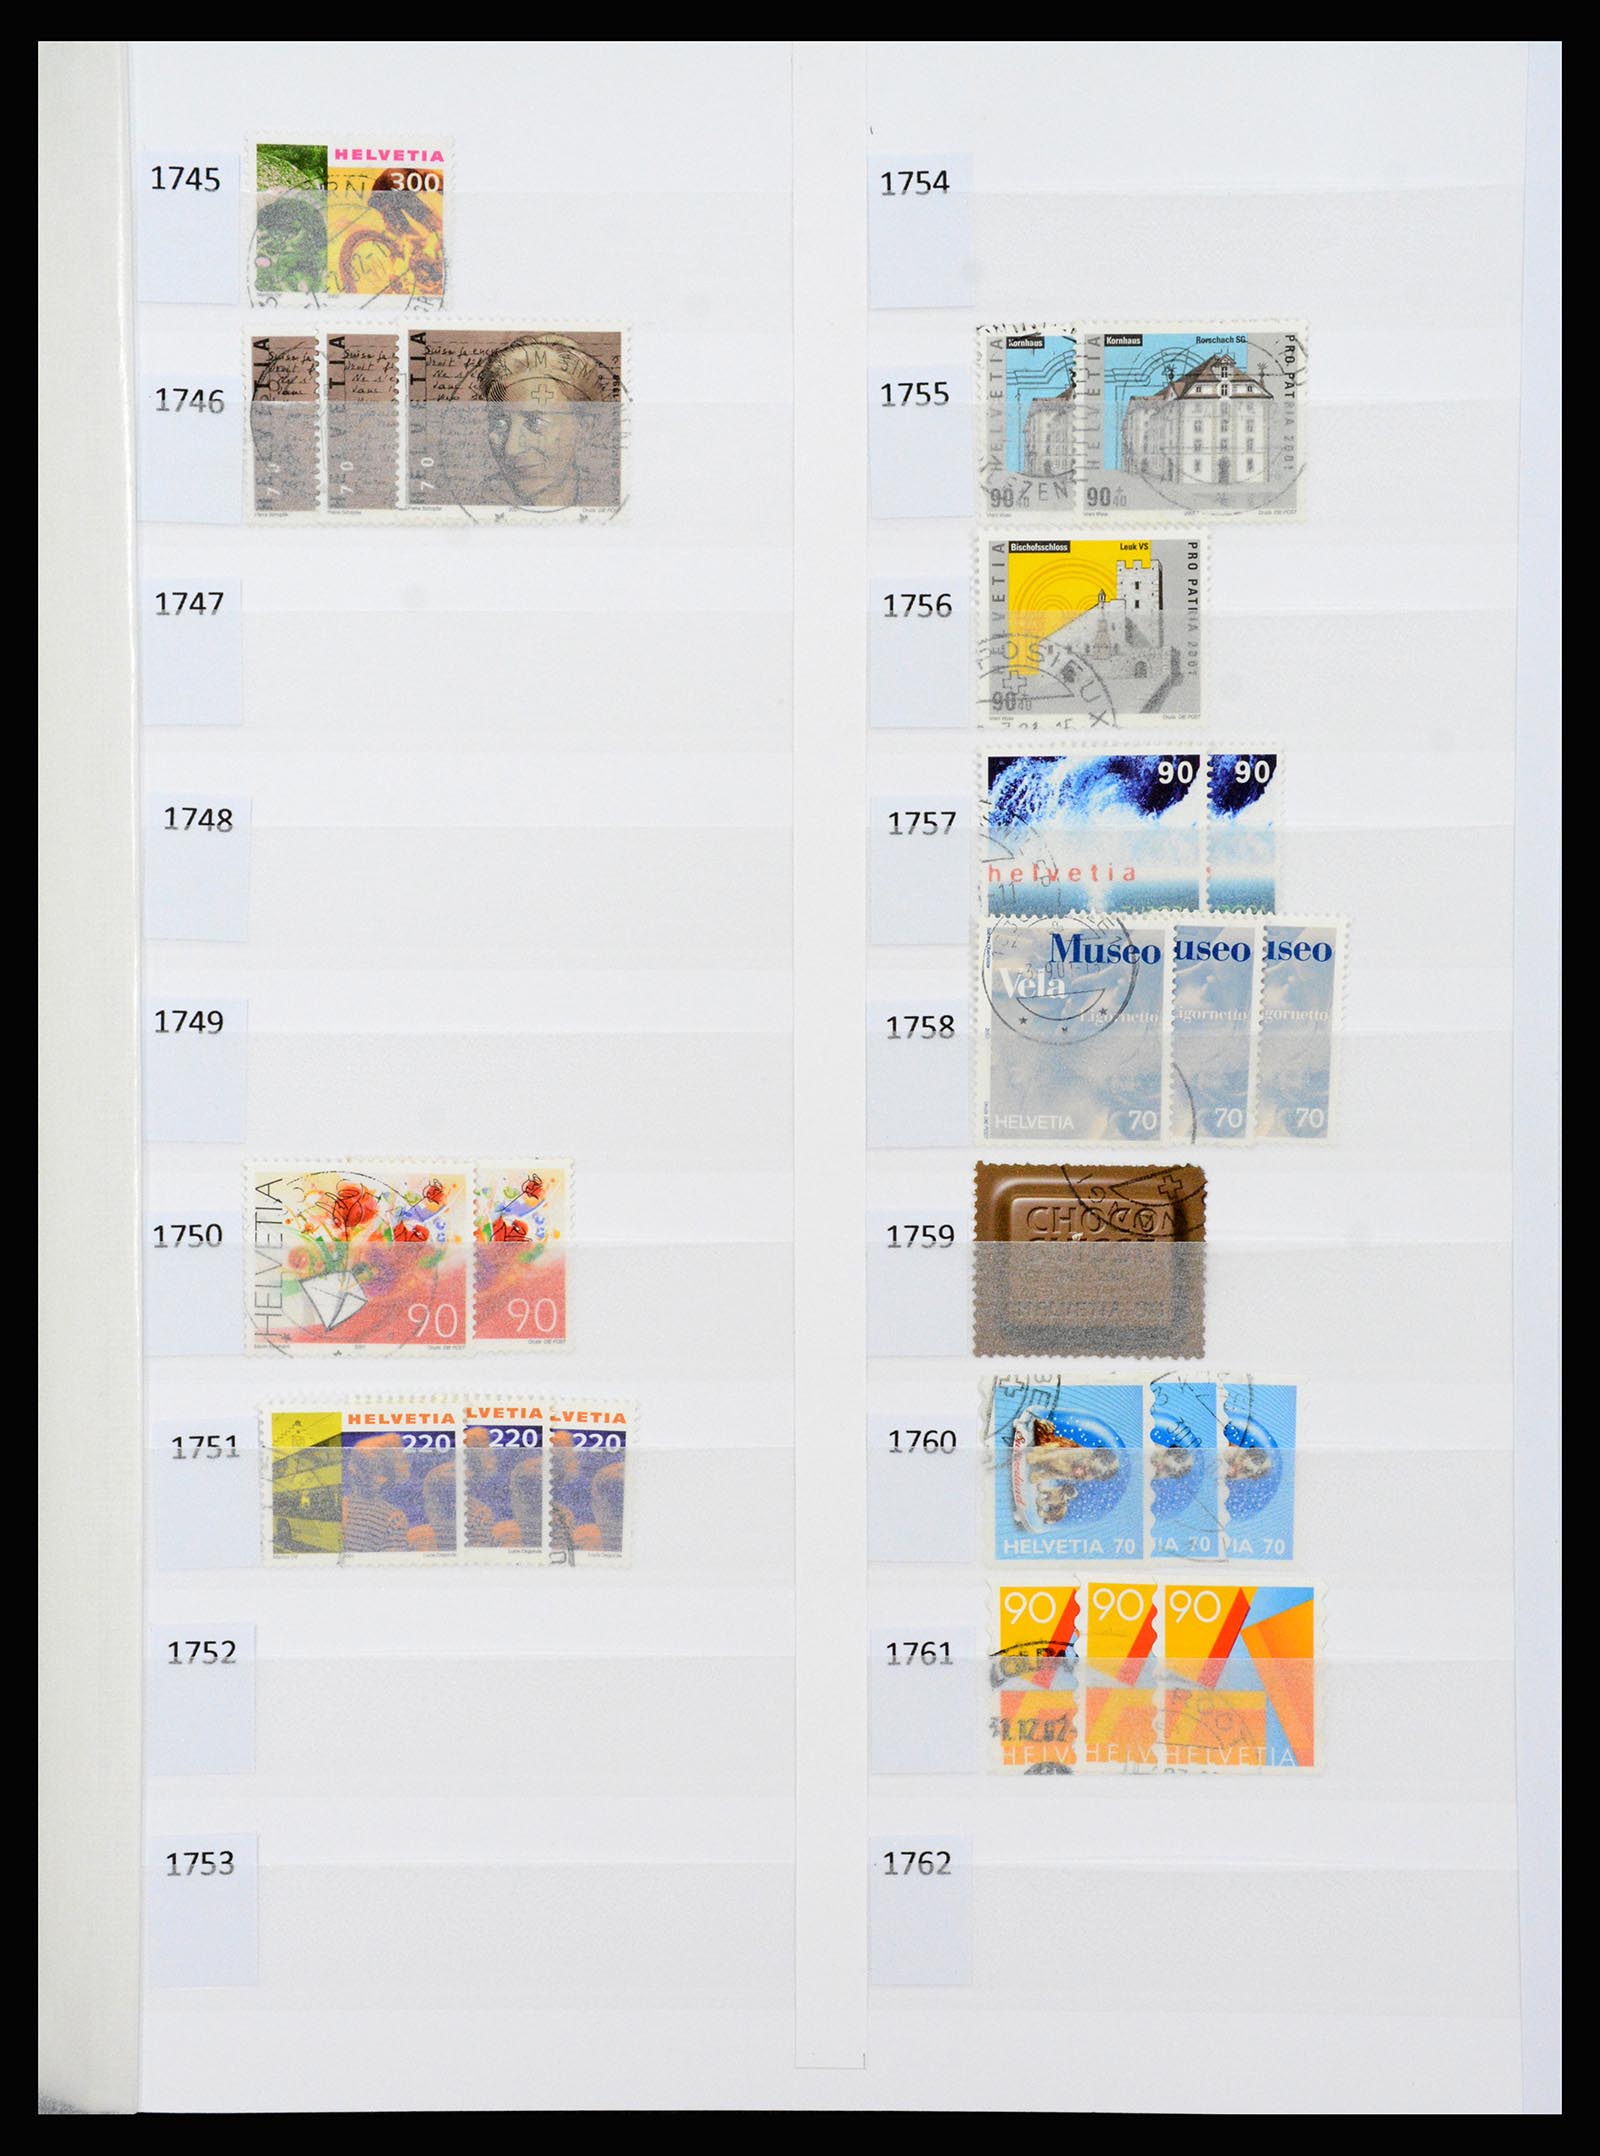 37252 098 - Stamp collection 37252 Switzerland 1900-2011.